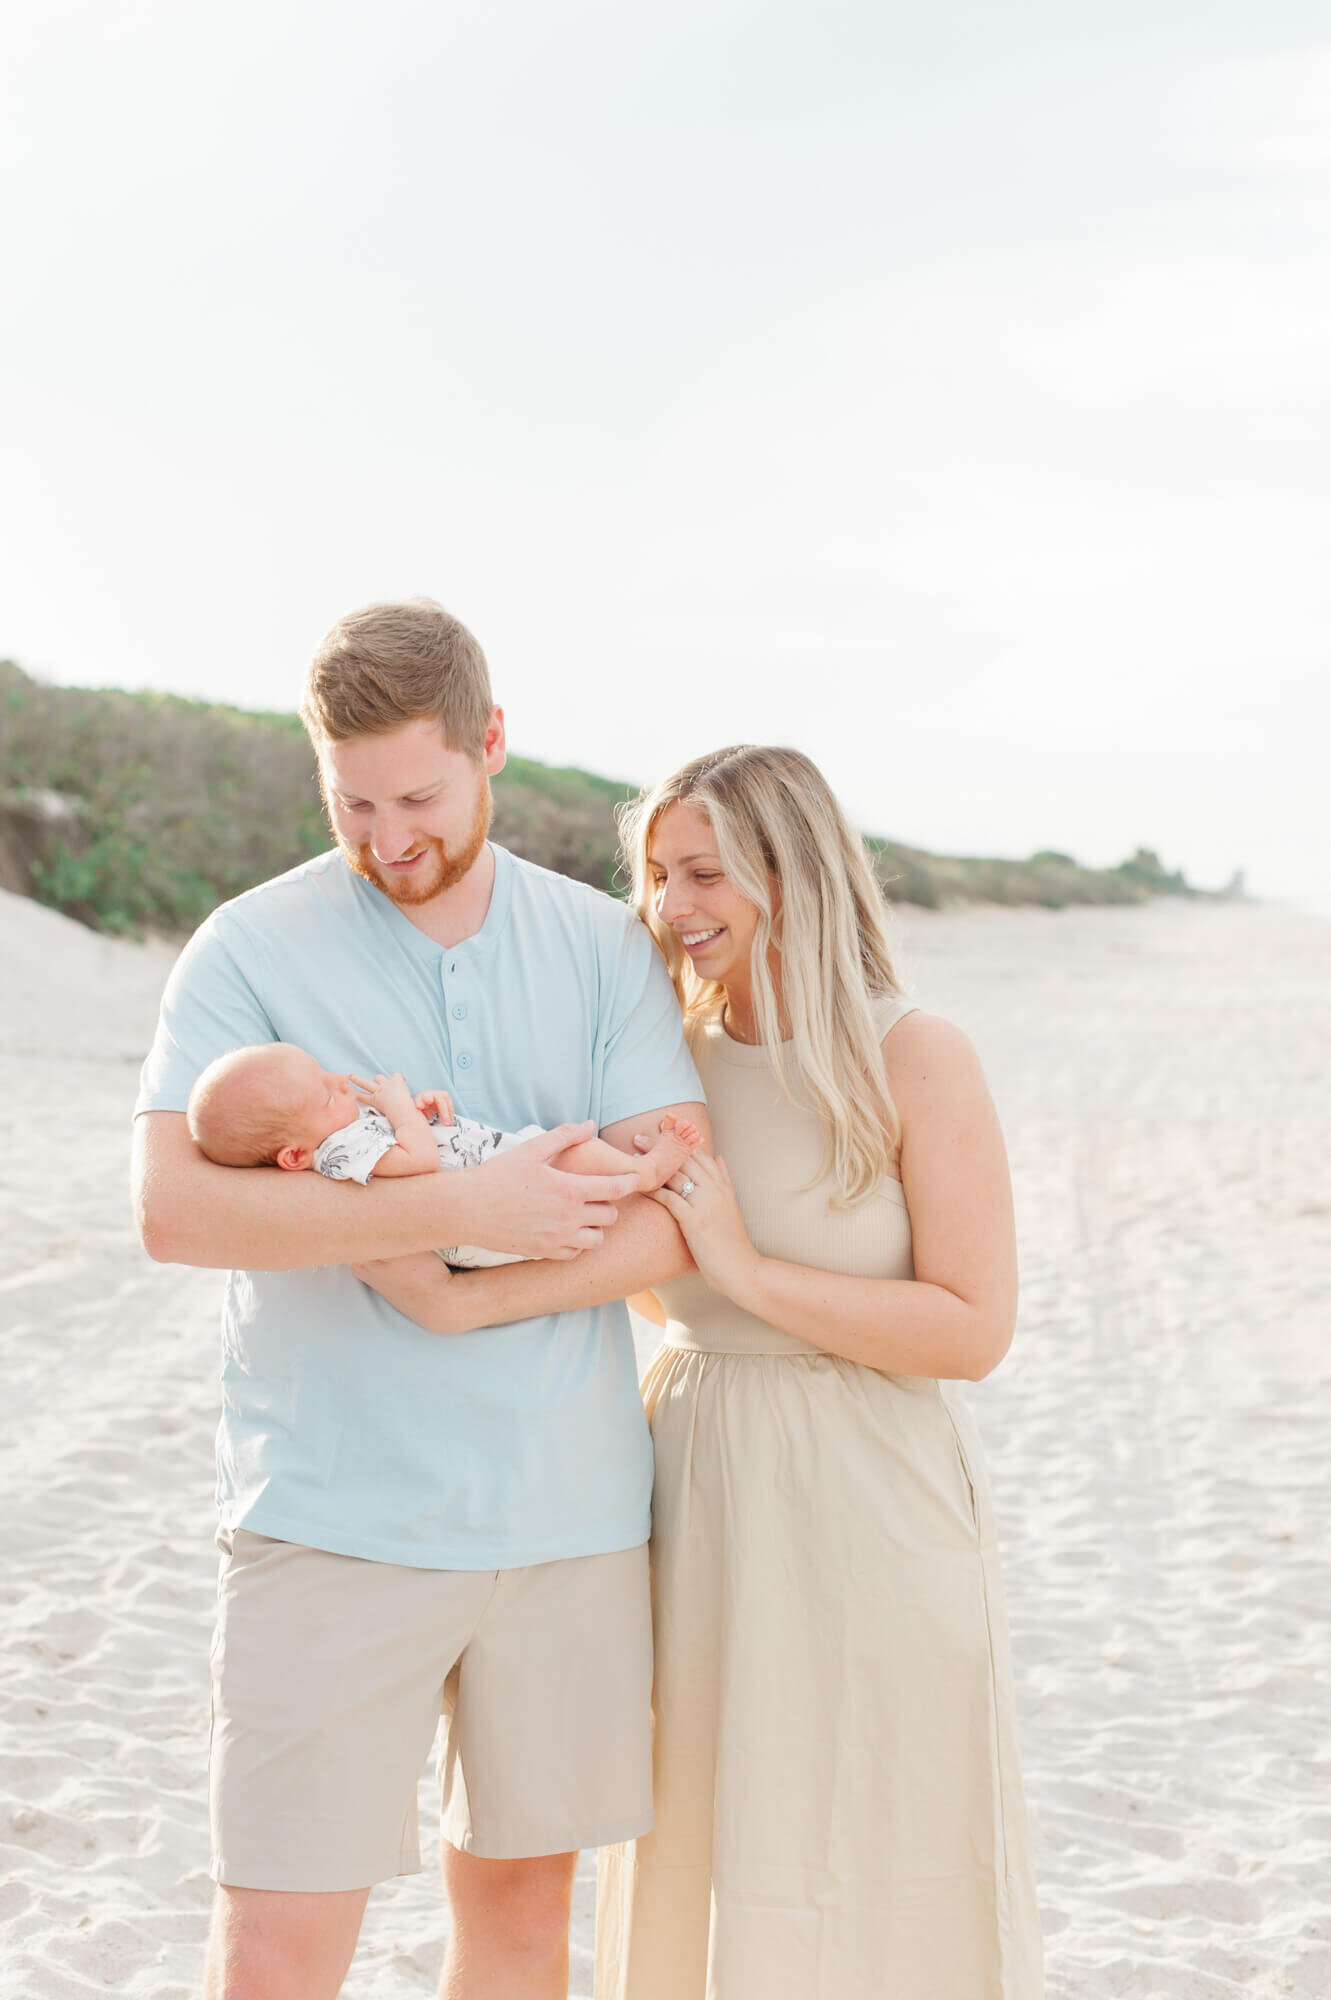 Vero Beach family photographer captures new parents holding newborn on the beach at sunset